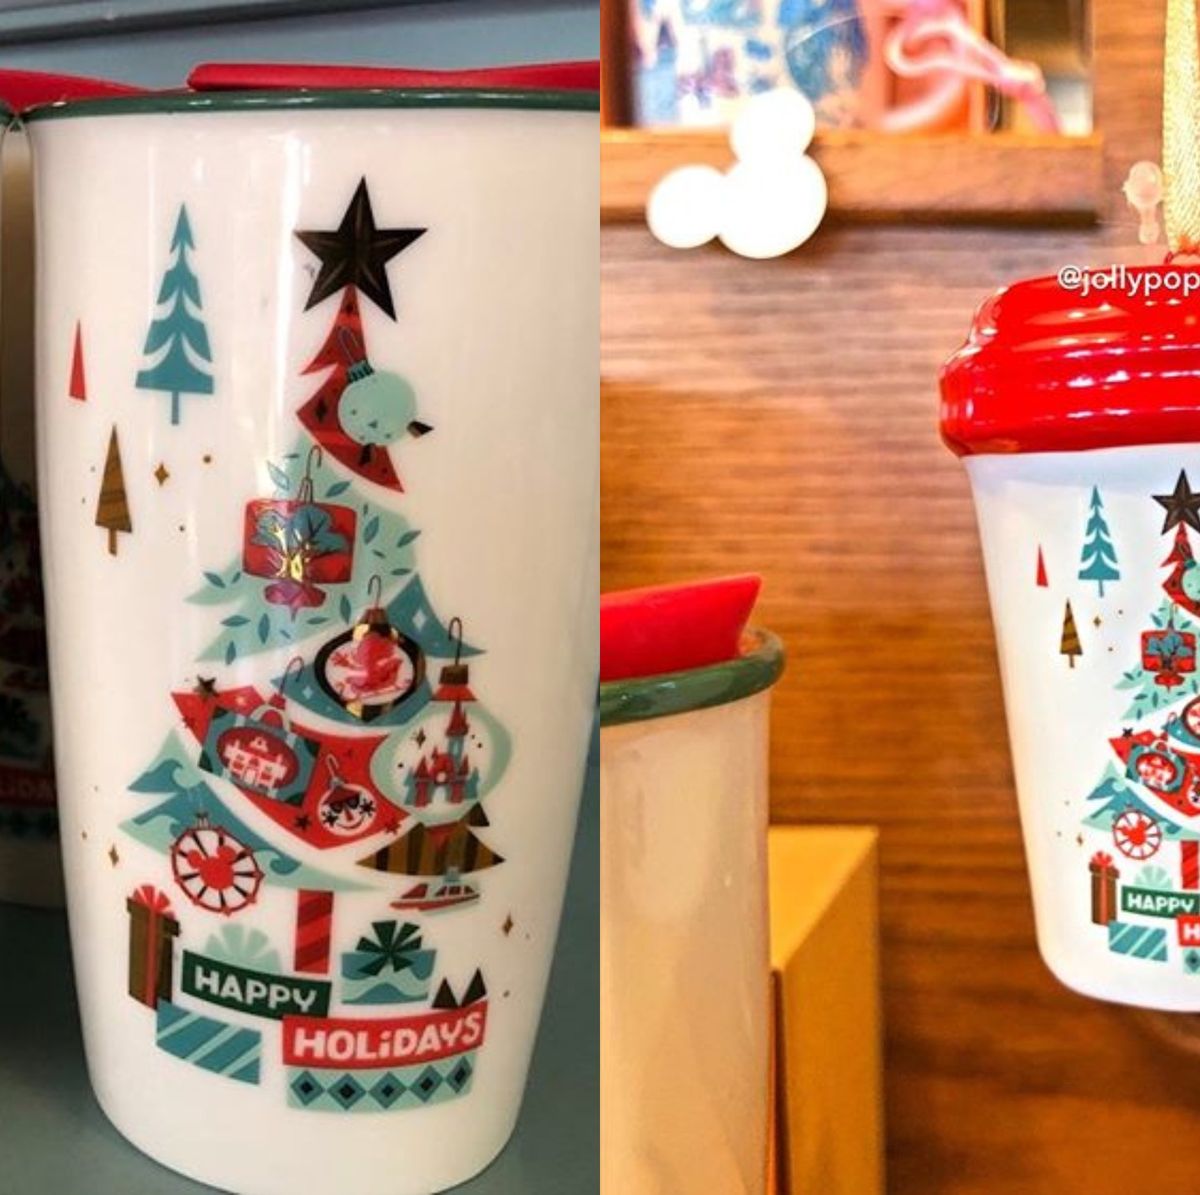 Disney and Starbucks Reveal NEW Christmas Mug & Ornaments - Inside the Magic